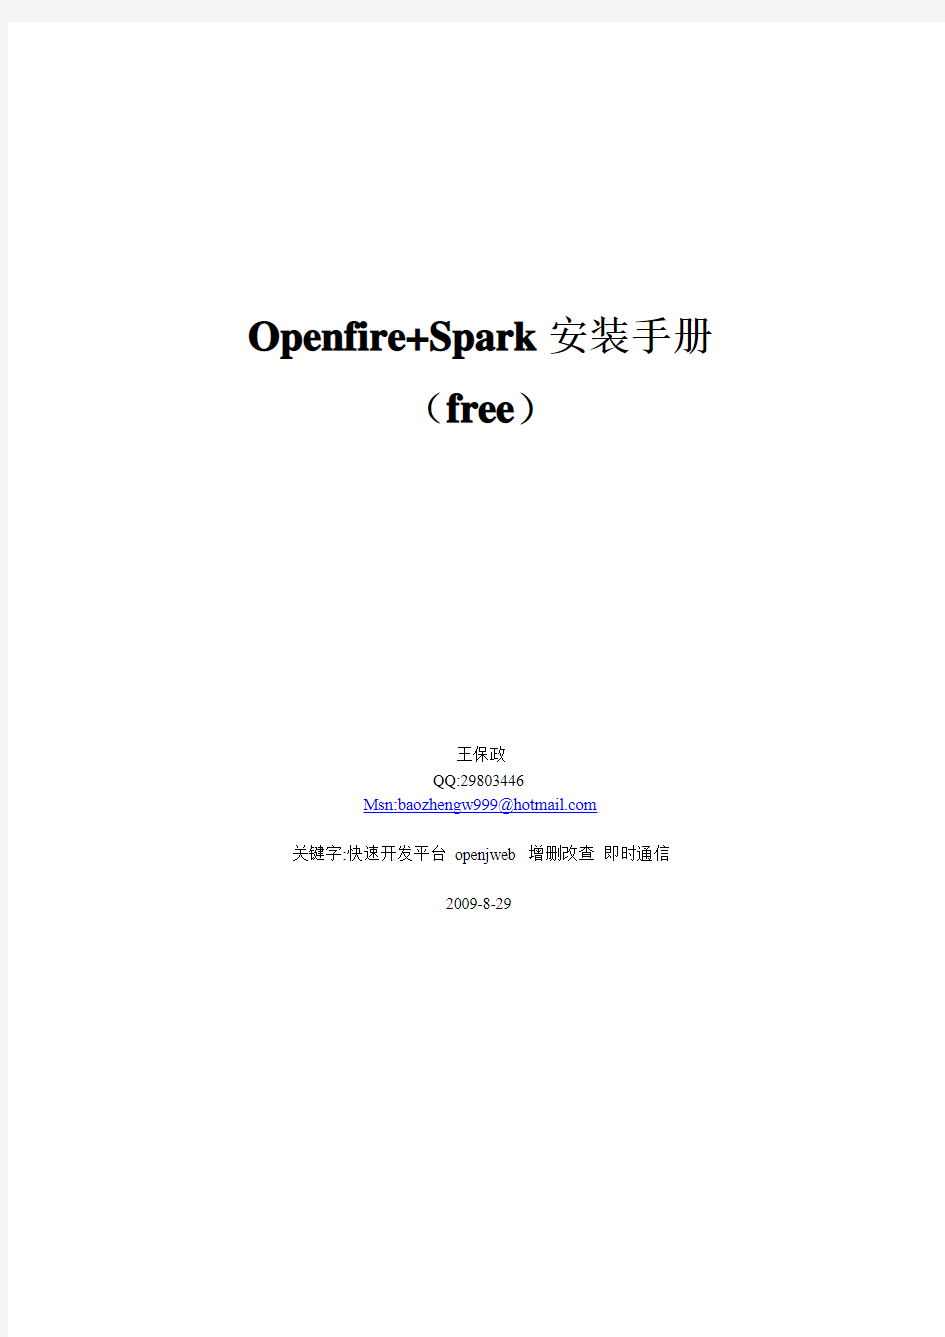 Openfire_spark_安装手册(free)